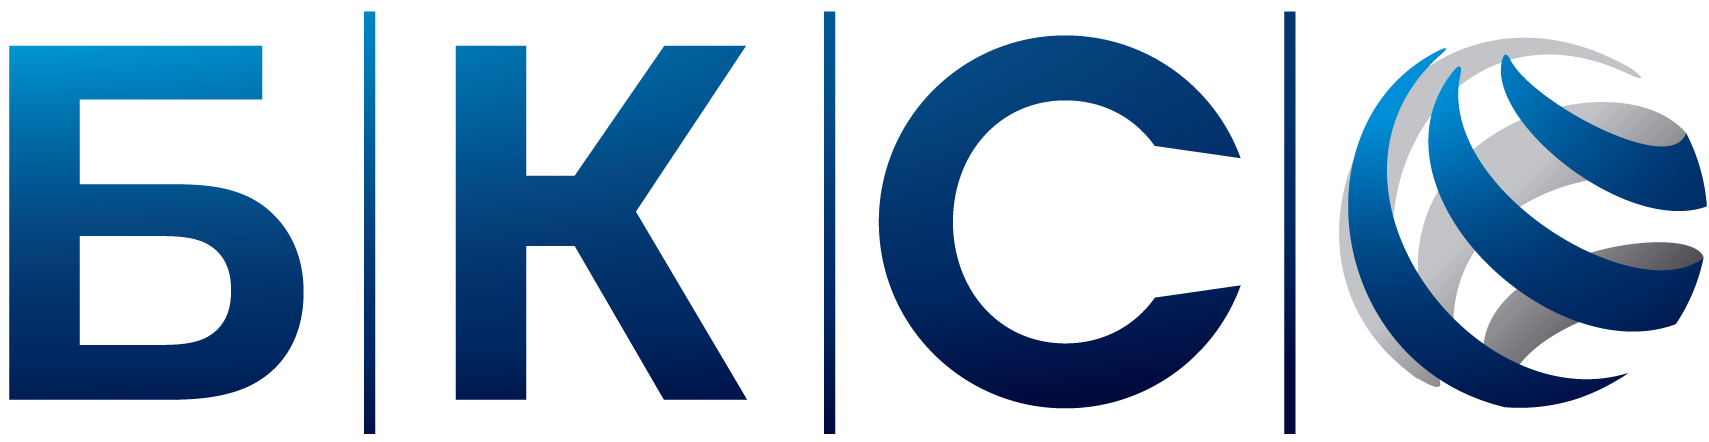 БКС банк логотип. БКС финансовая группа. БКС брокер лого. БКС инвестиции лого.